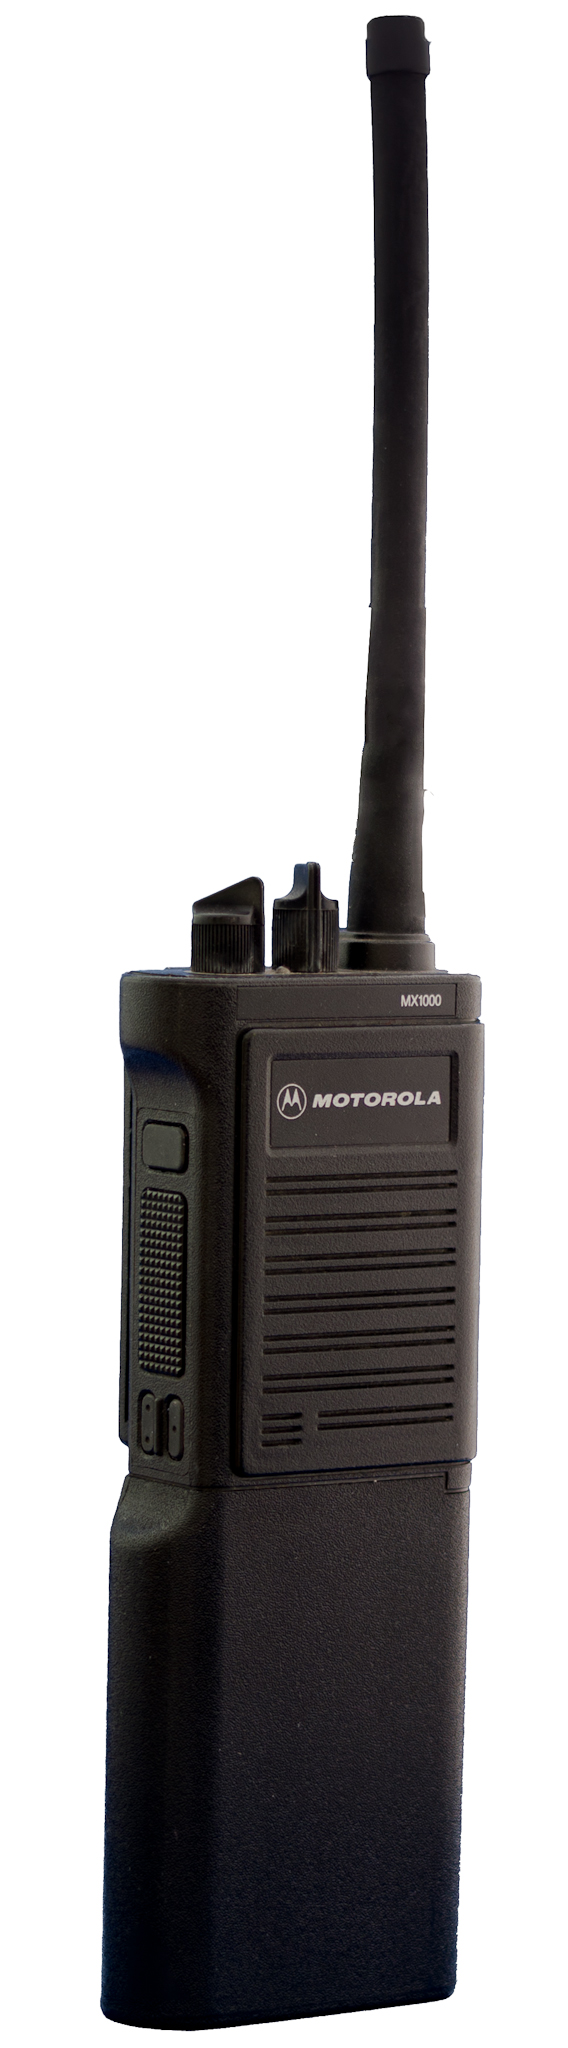 Motorola MX1000